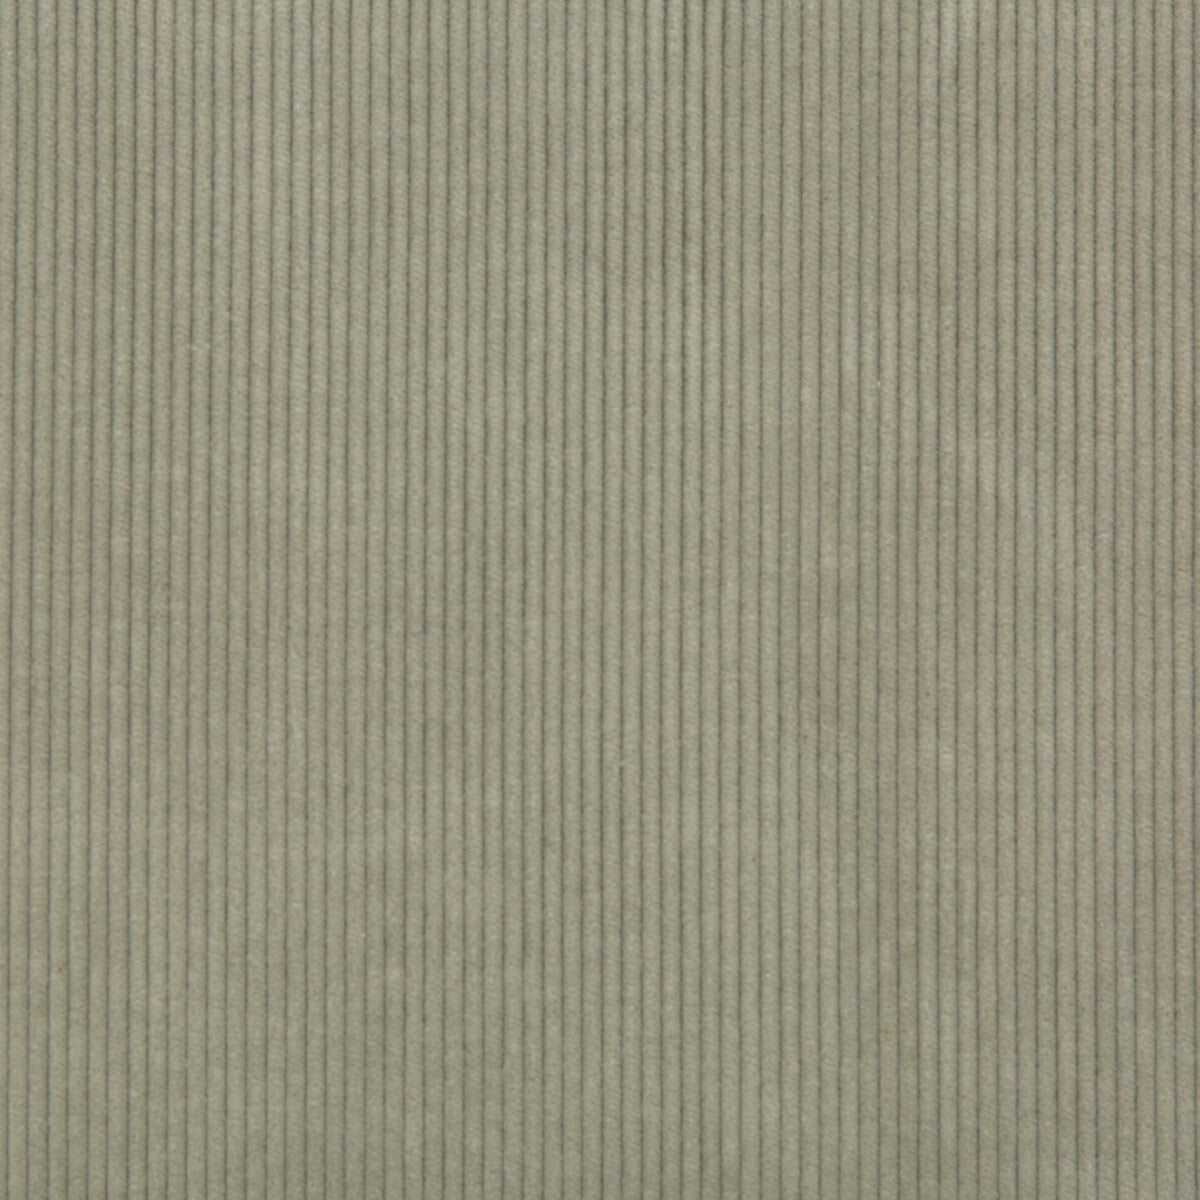 Saranac Cord fabric in celadon color - pattern 2017121.316.0 - by Lee Jofa